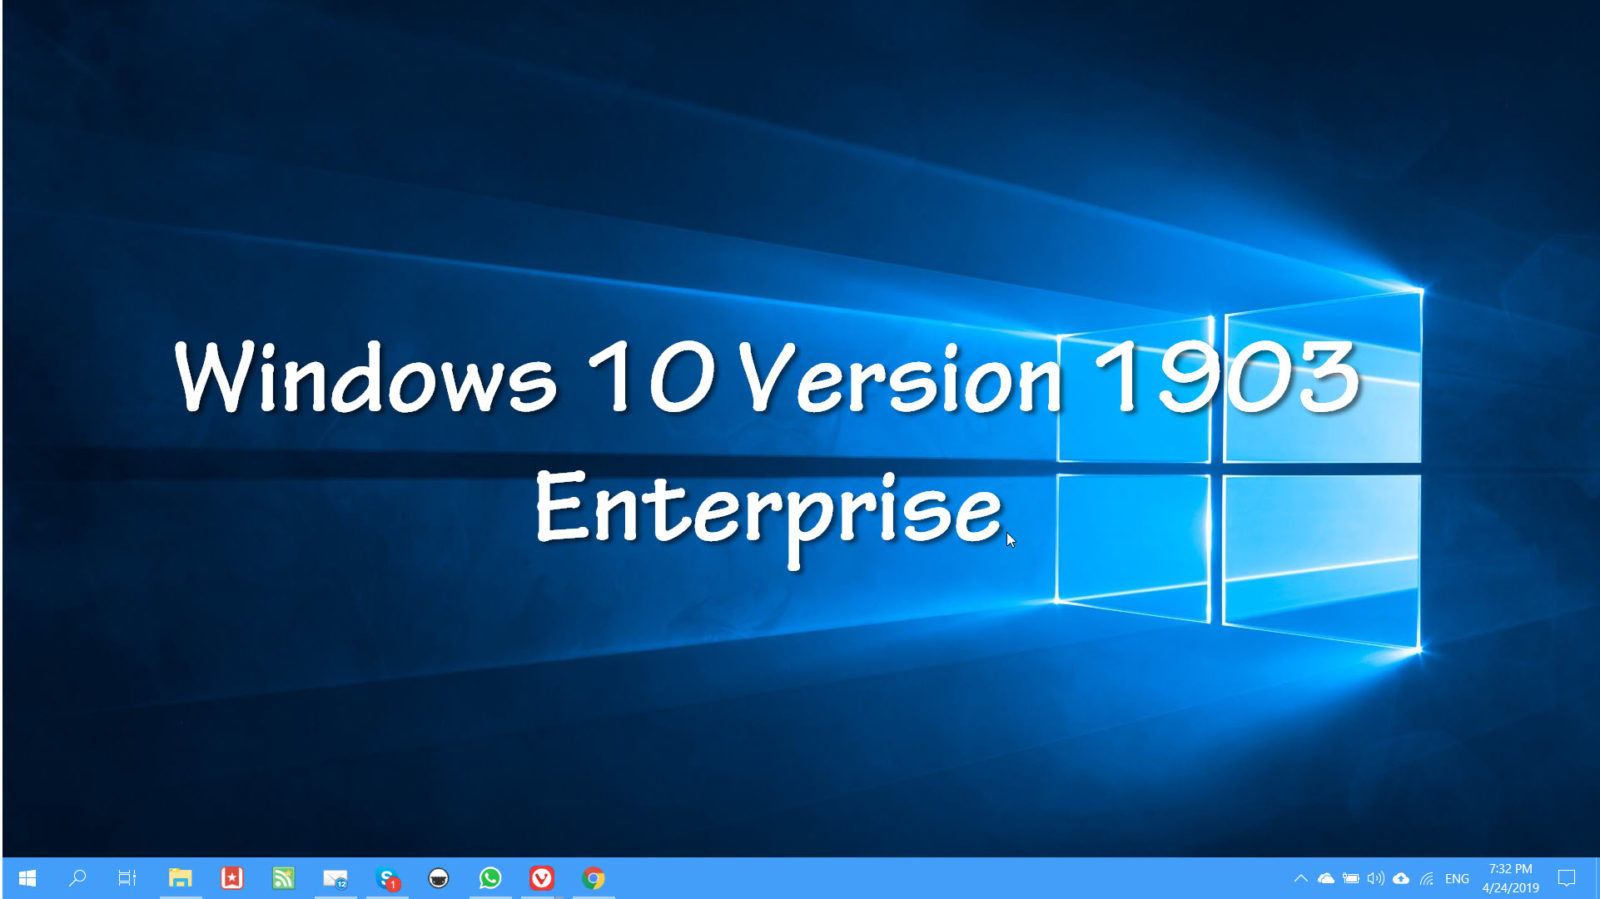 windows 10 pro free download full version 1903 iso